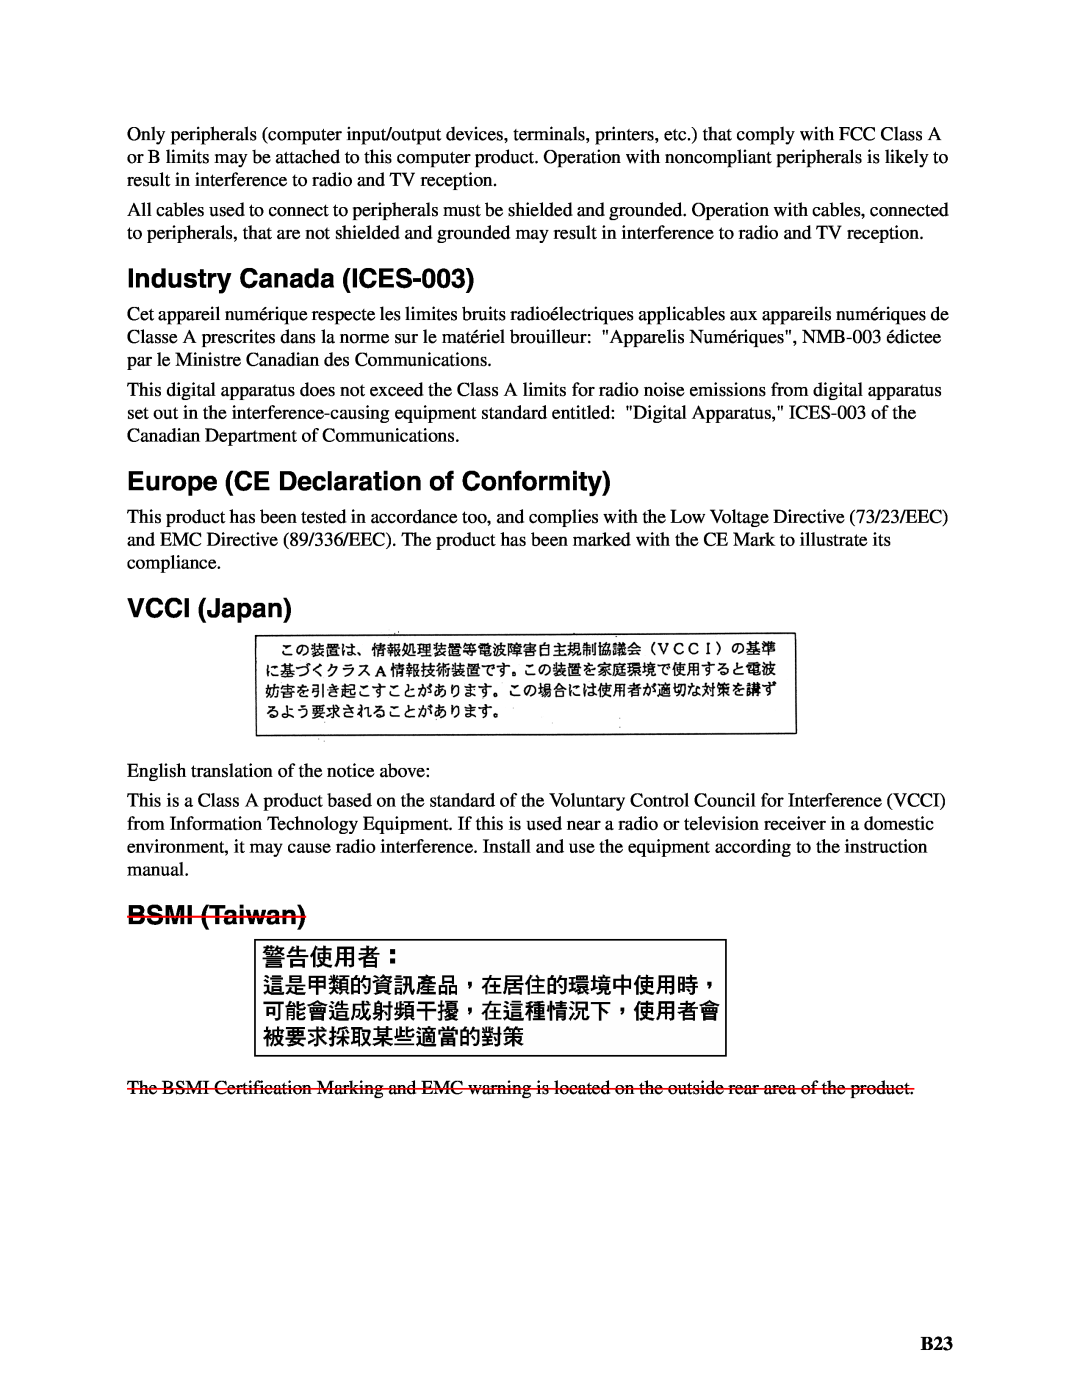 Intel SEBFCM4 manual Industry Canada ICES-003, Europe CE Declaration of Conformity, VCCI Japan, BSMI Taiwan 